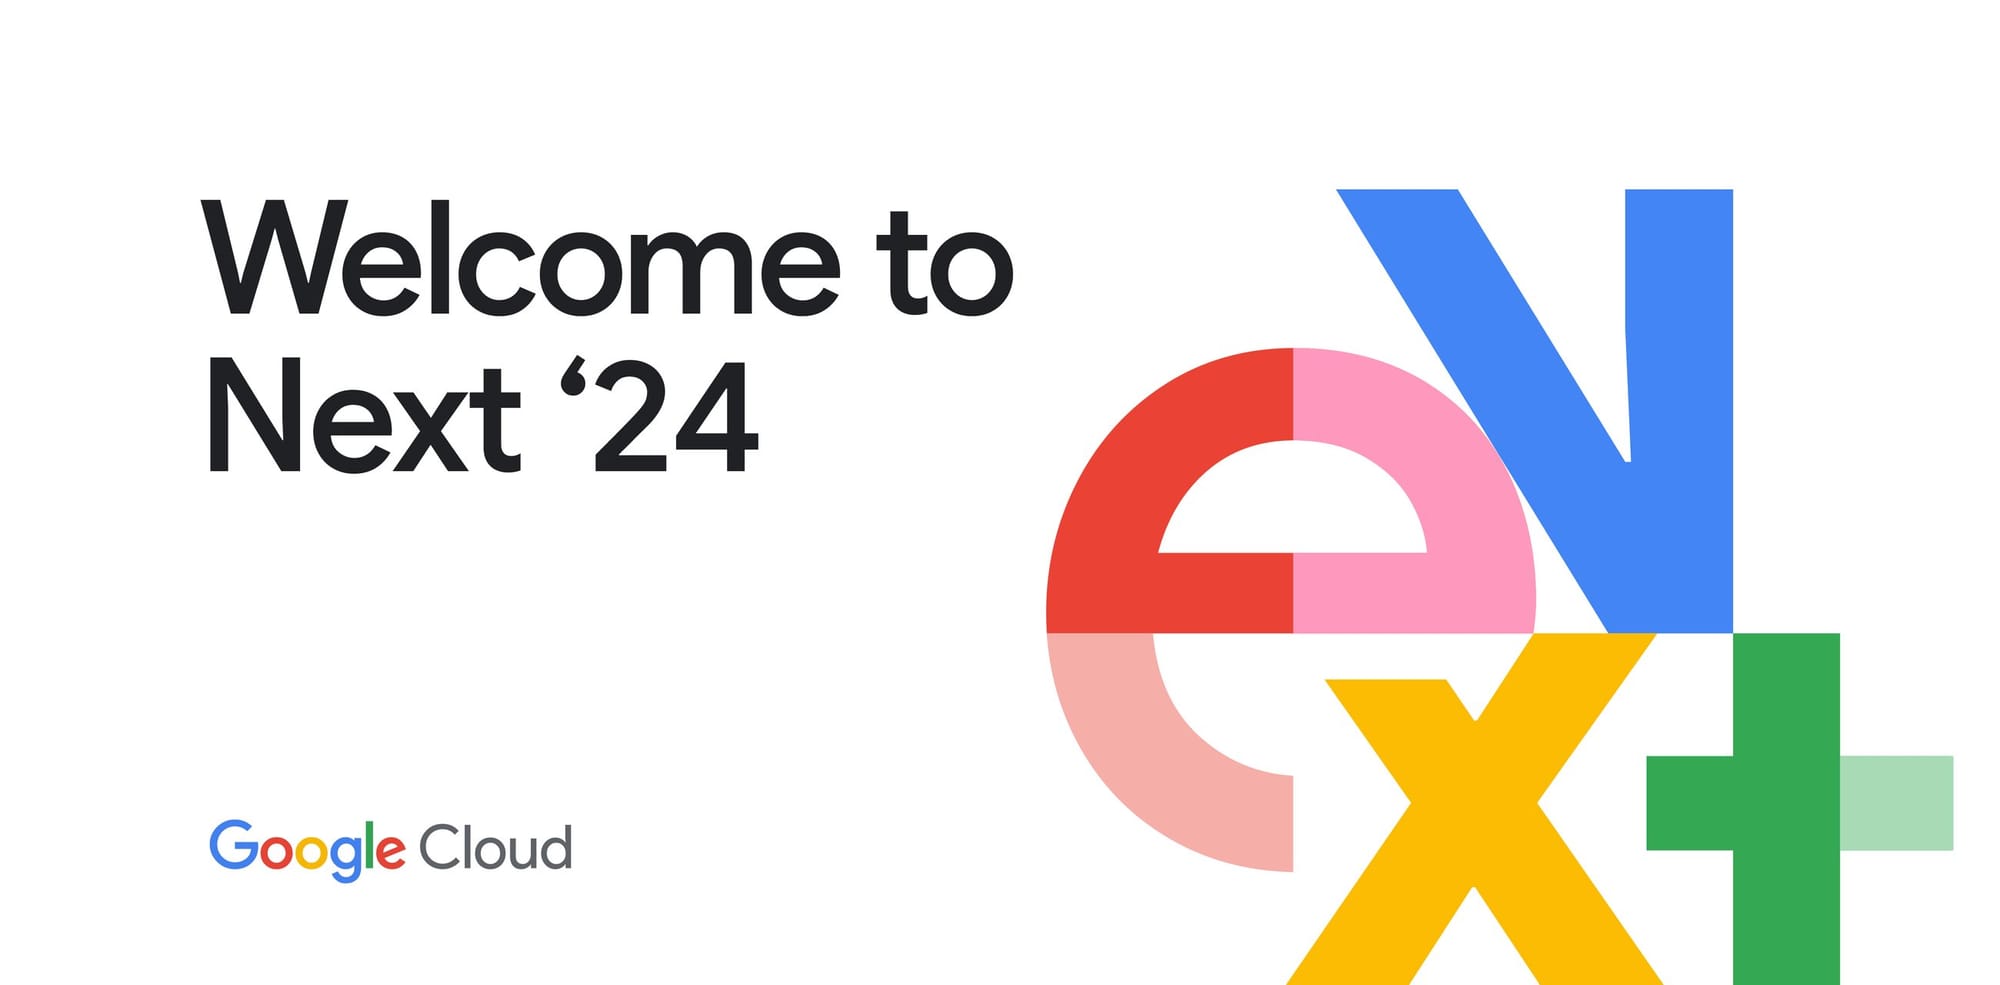 Google showcased its AI ecosystem at Google Cloud Next '24